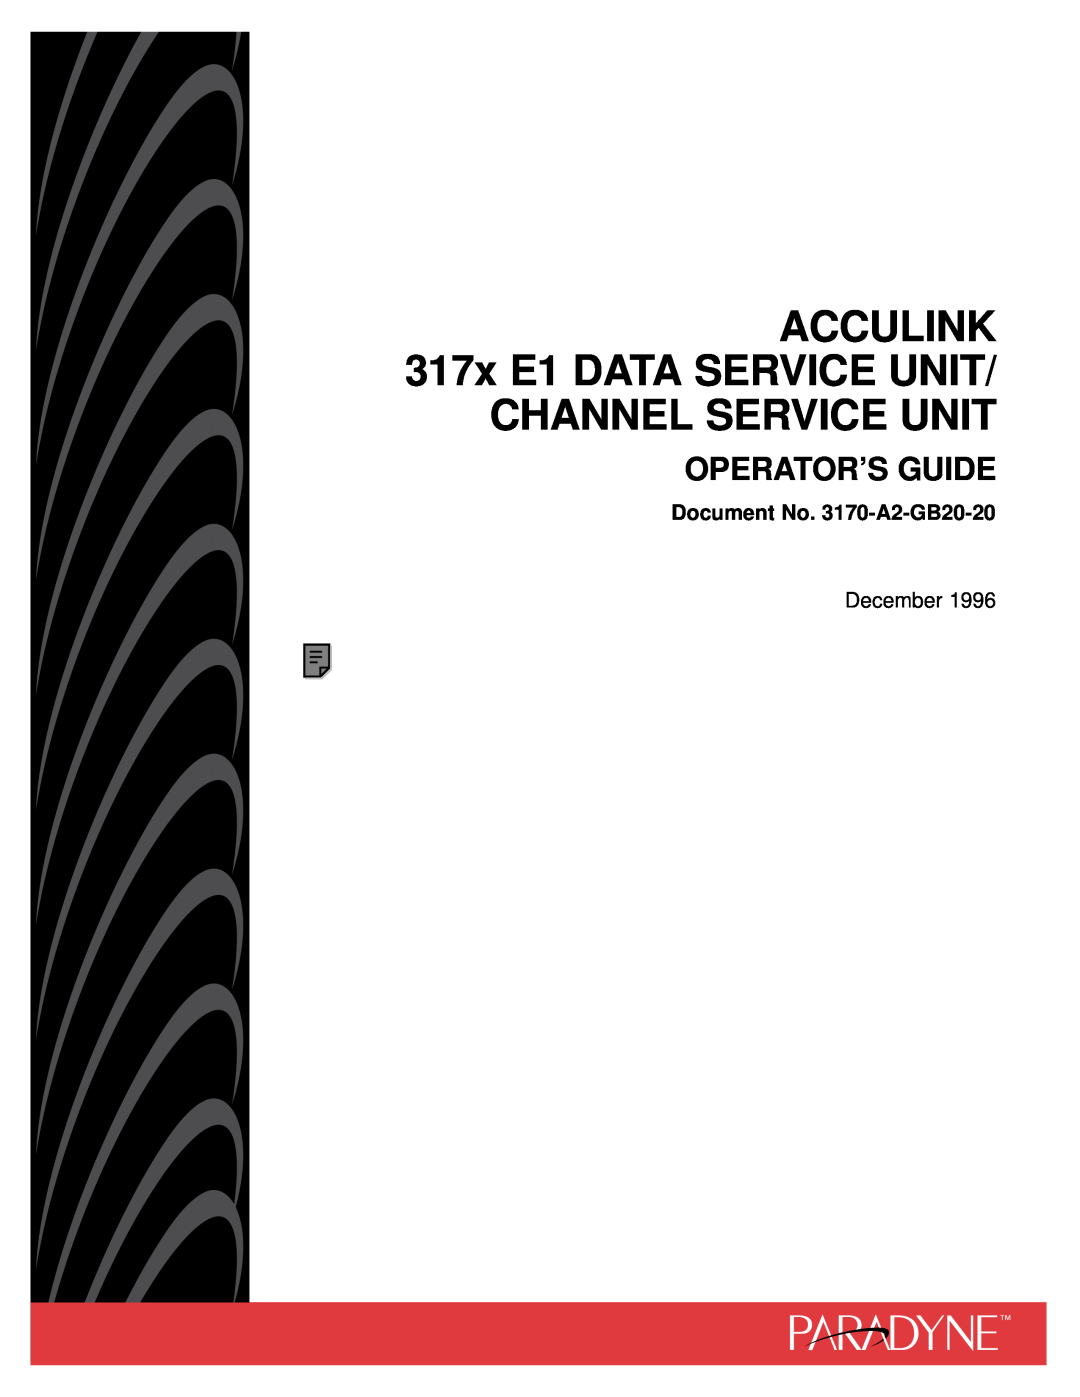 Paradyne 317x E1 manual Operators Guide, Document No. 3170-A2-GB20-20, December, Channel Service Unit 